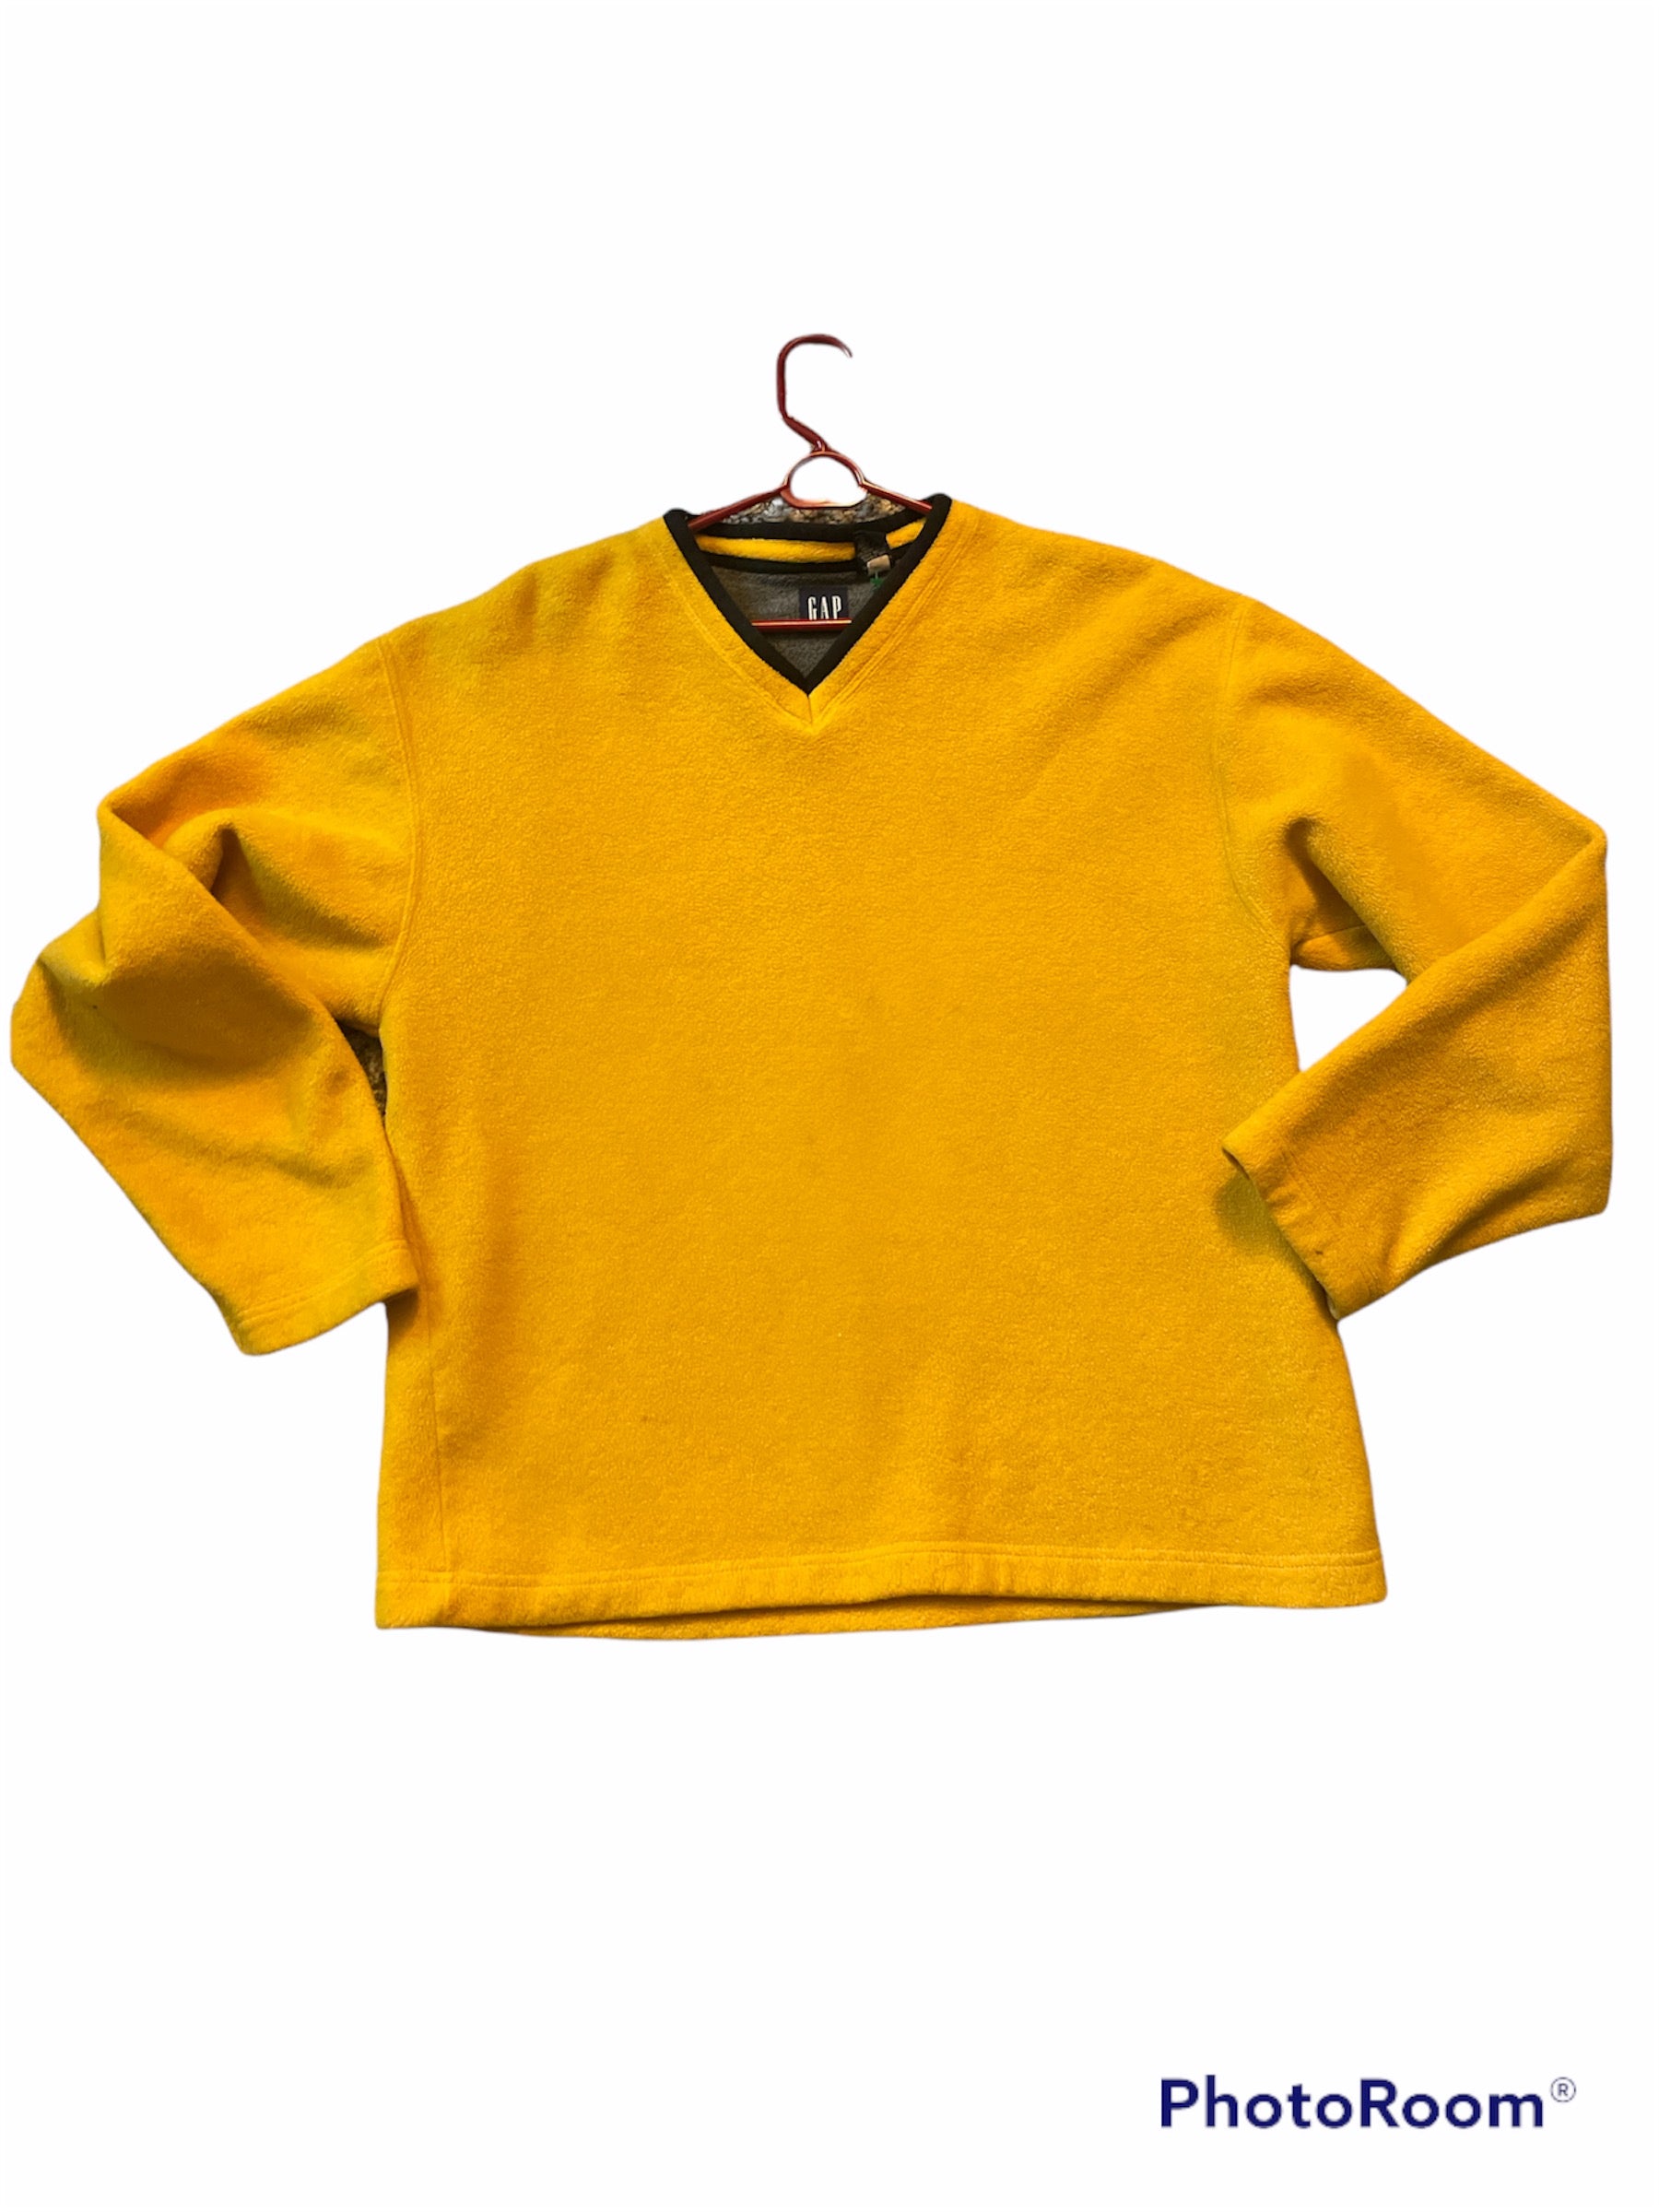 Gap Yellow pullover